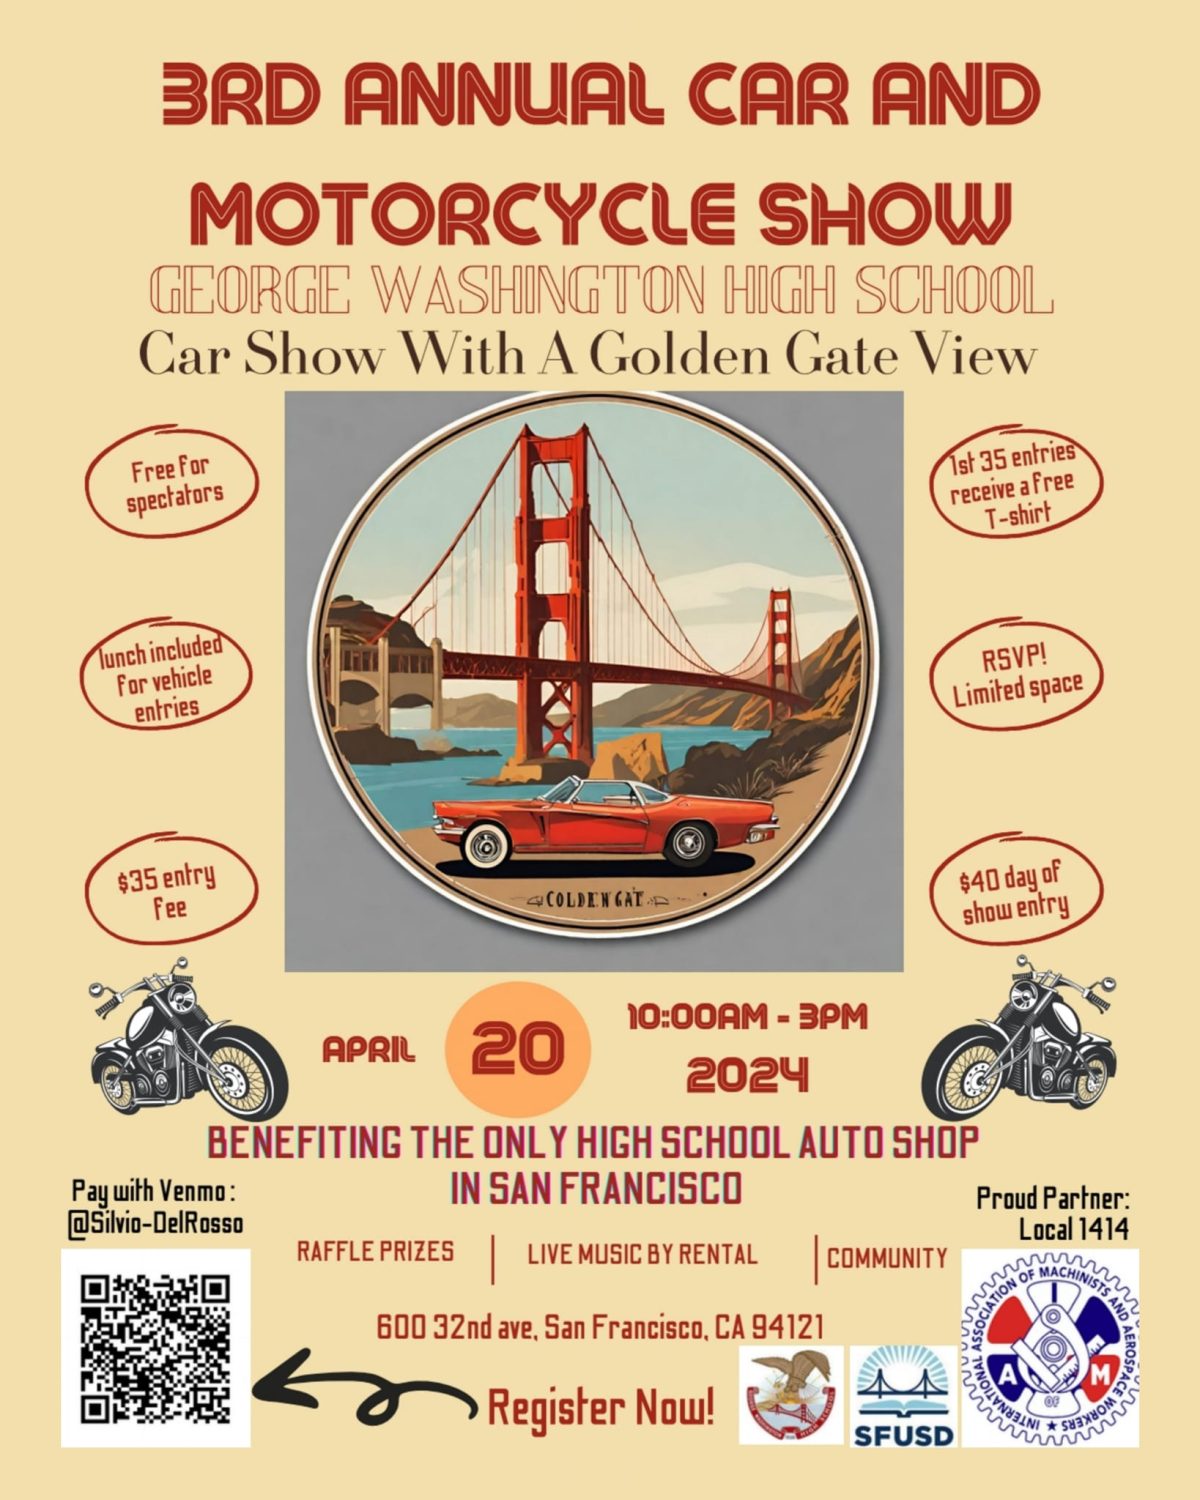 George Washington High School Car and Motorcycle Show